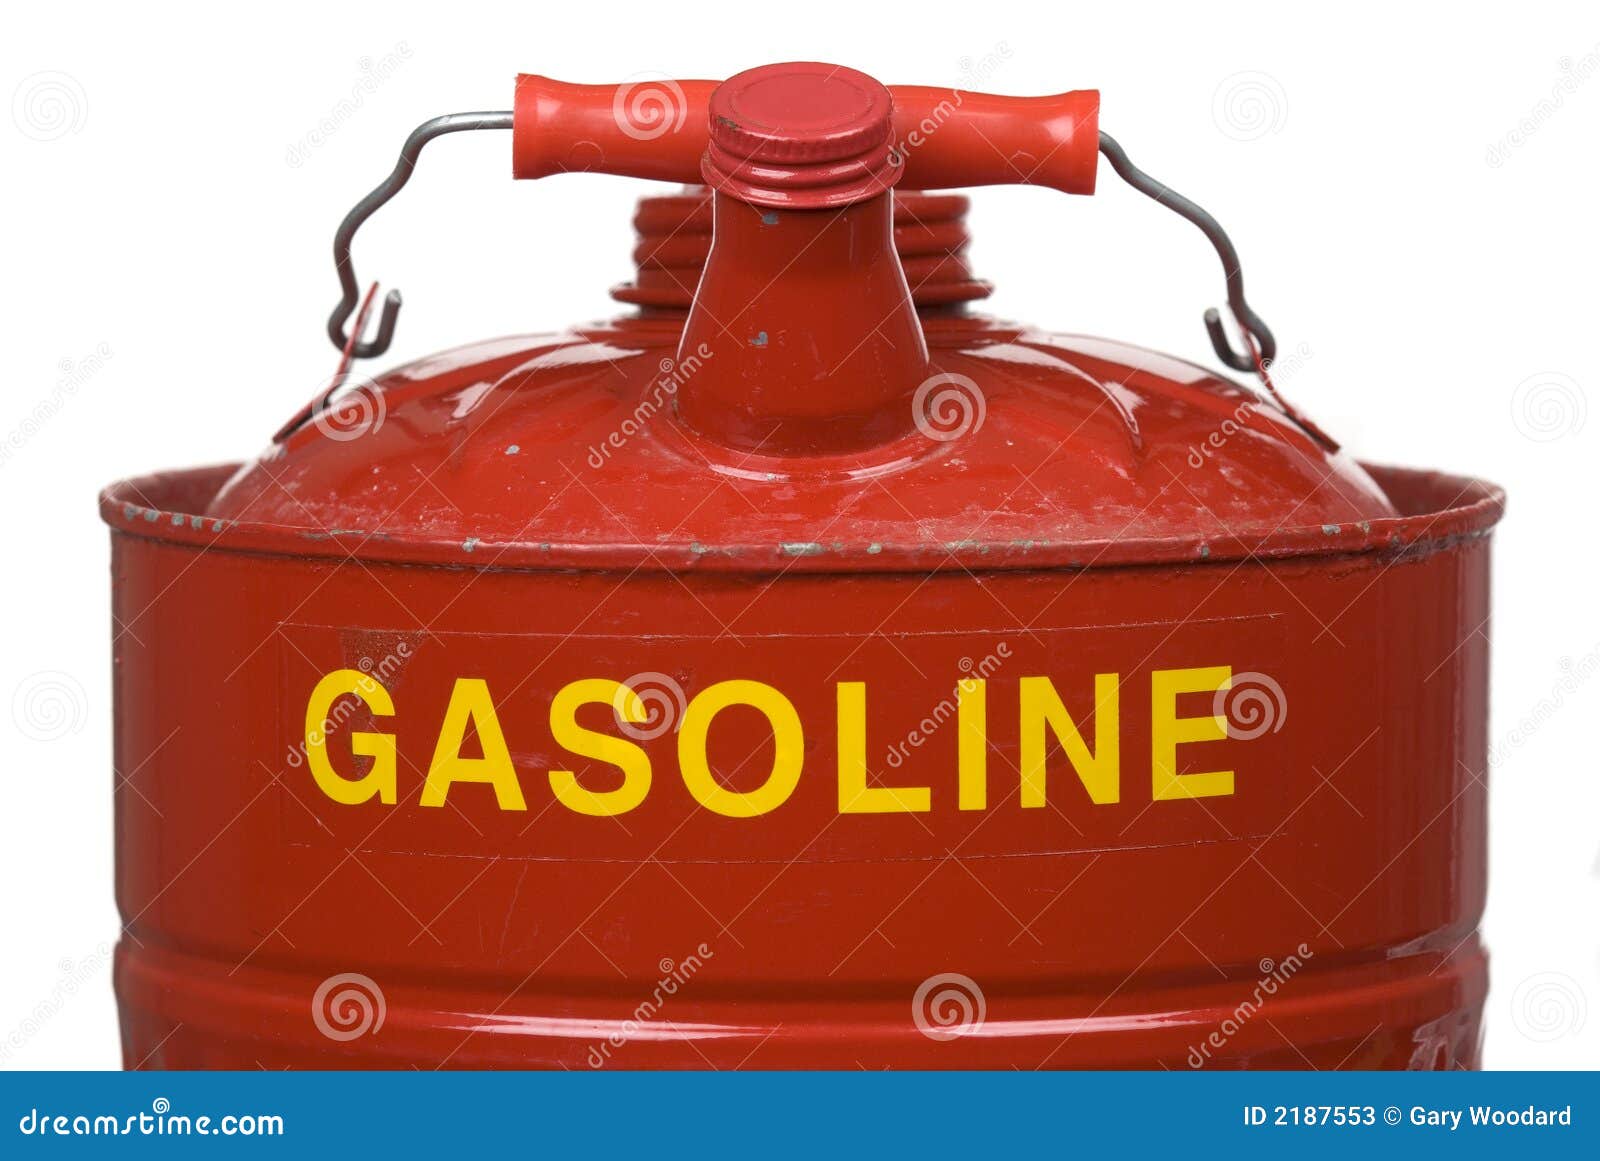 gasoline-can-2187553.jpg